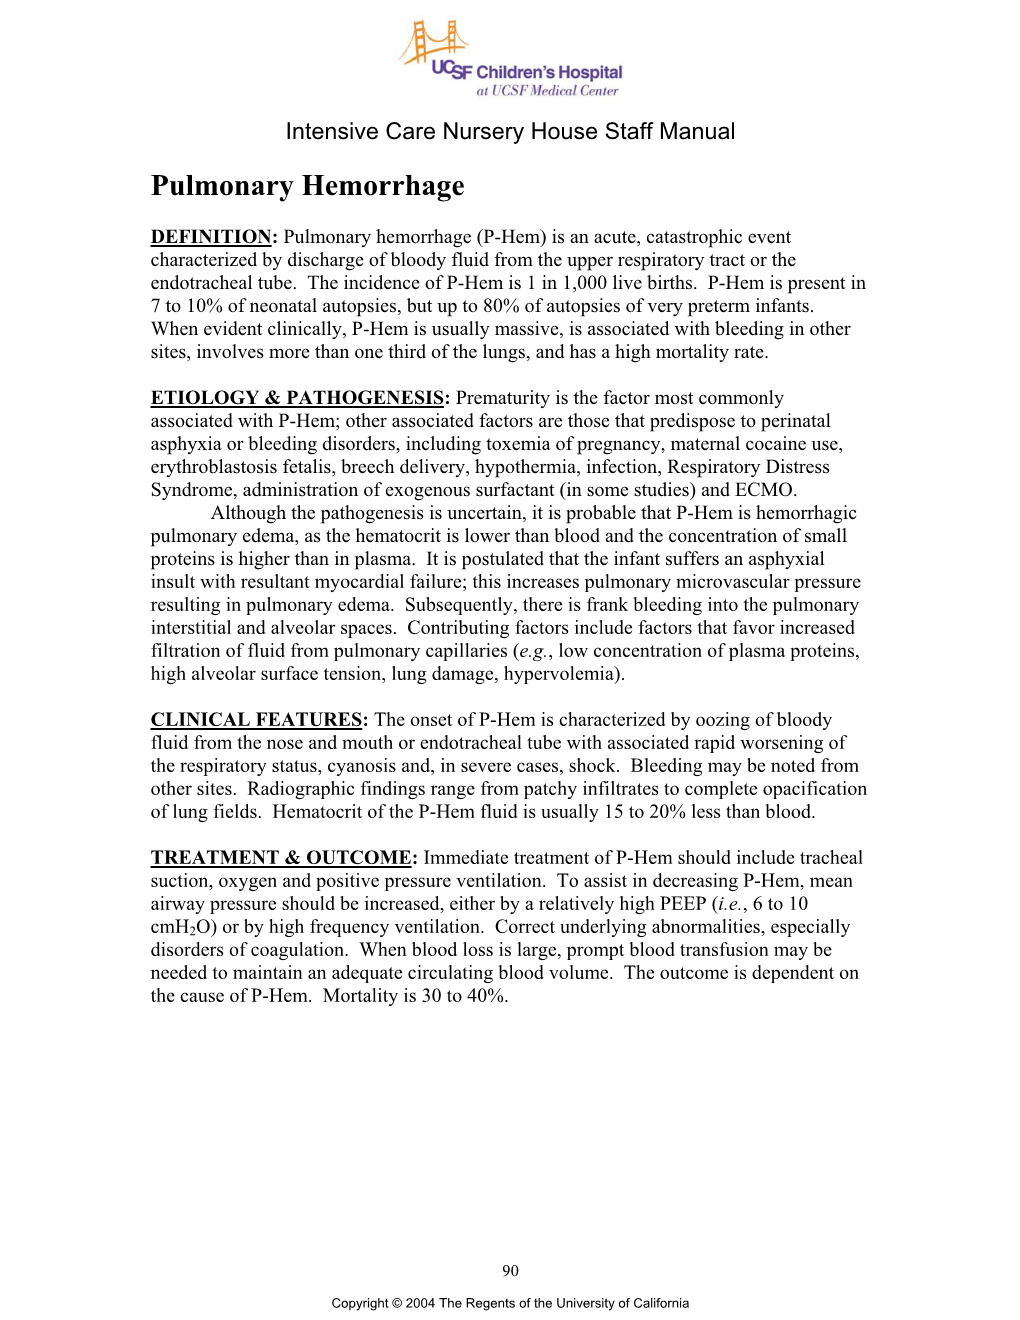 Pulmonary Hemorrhage